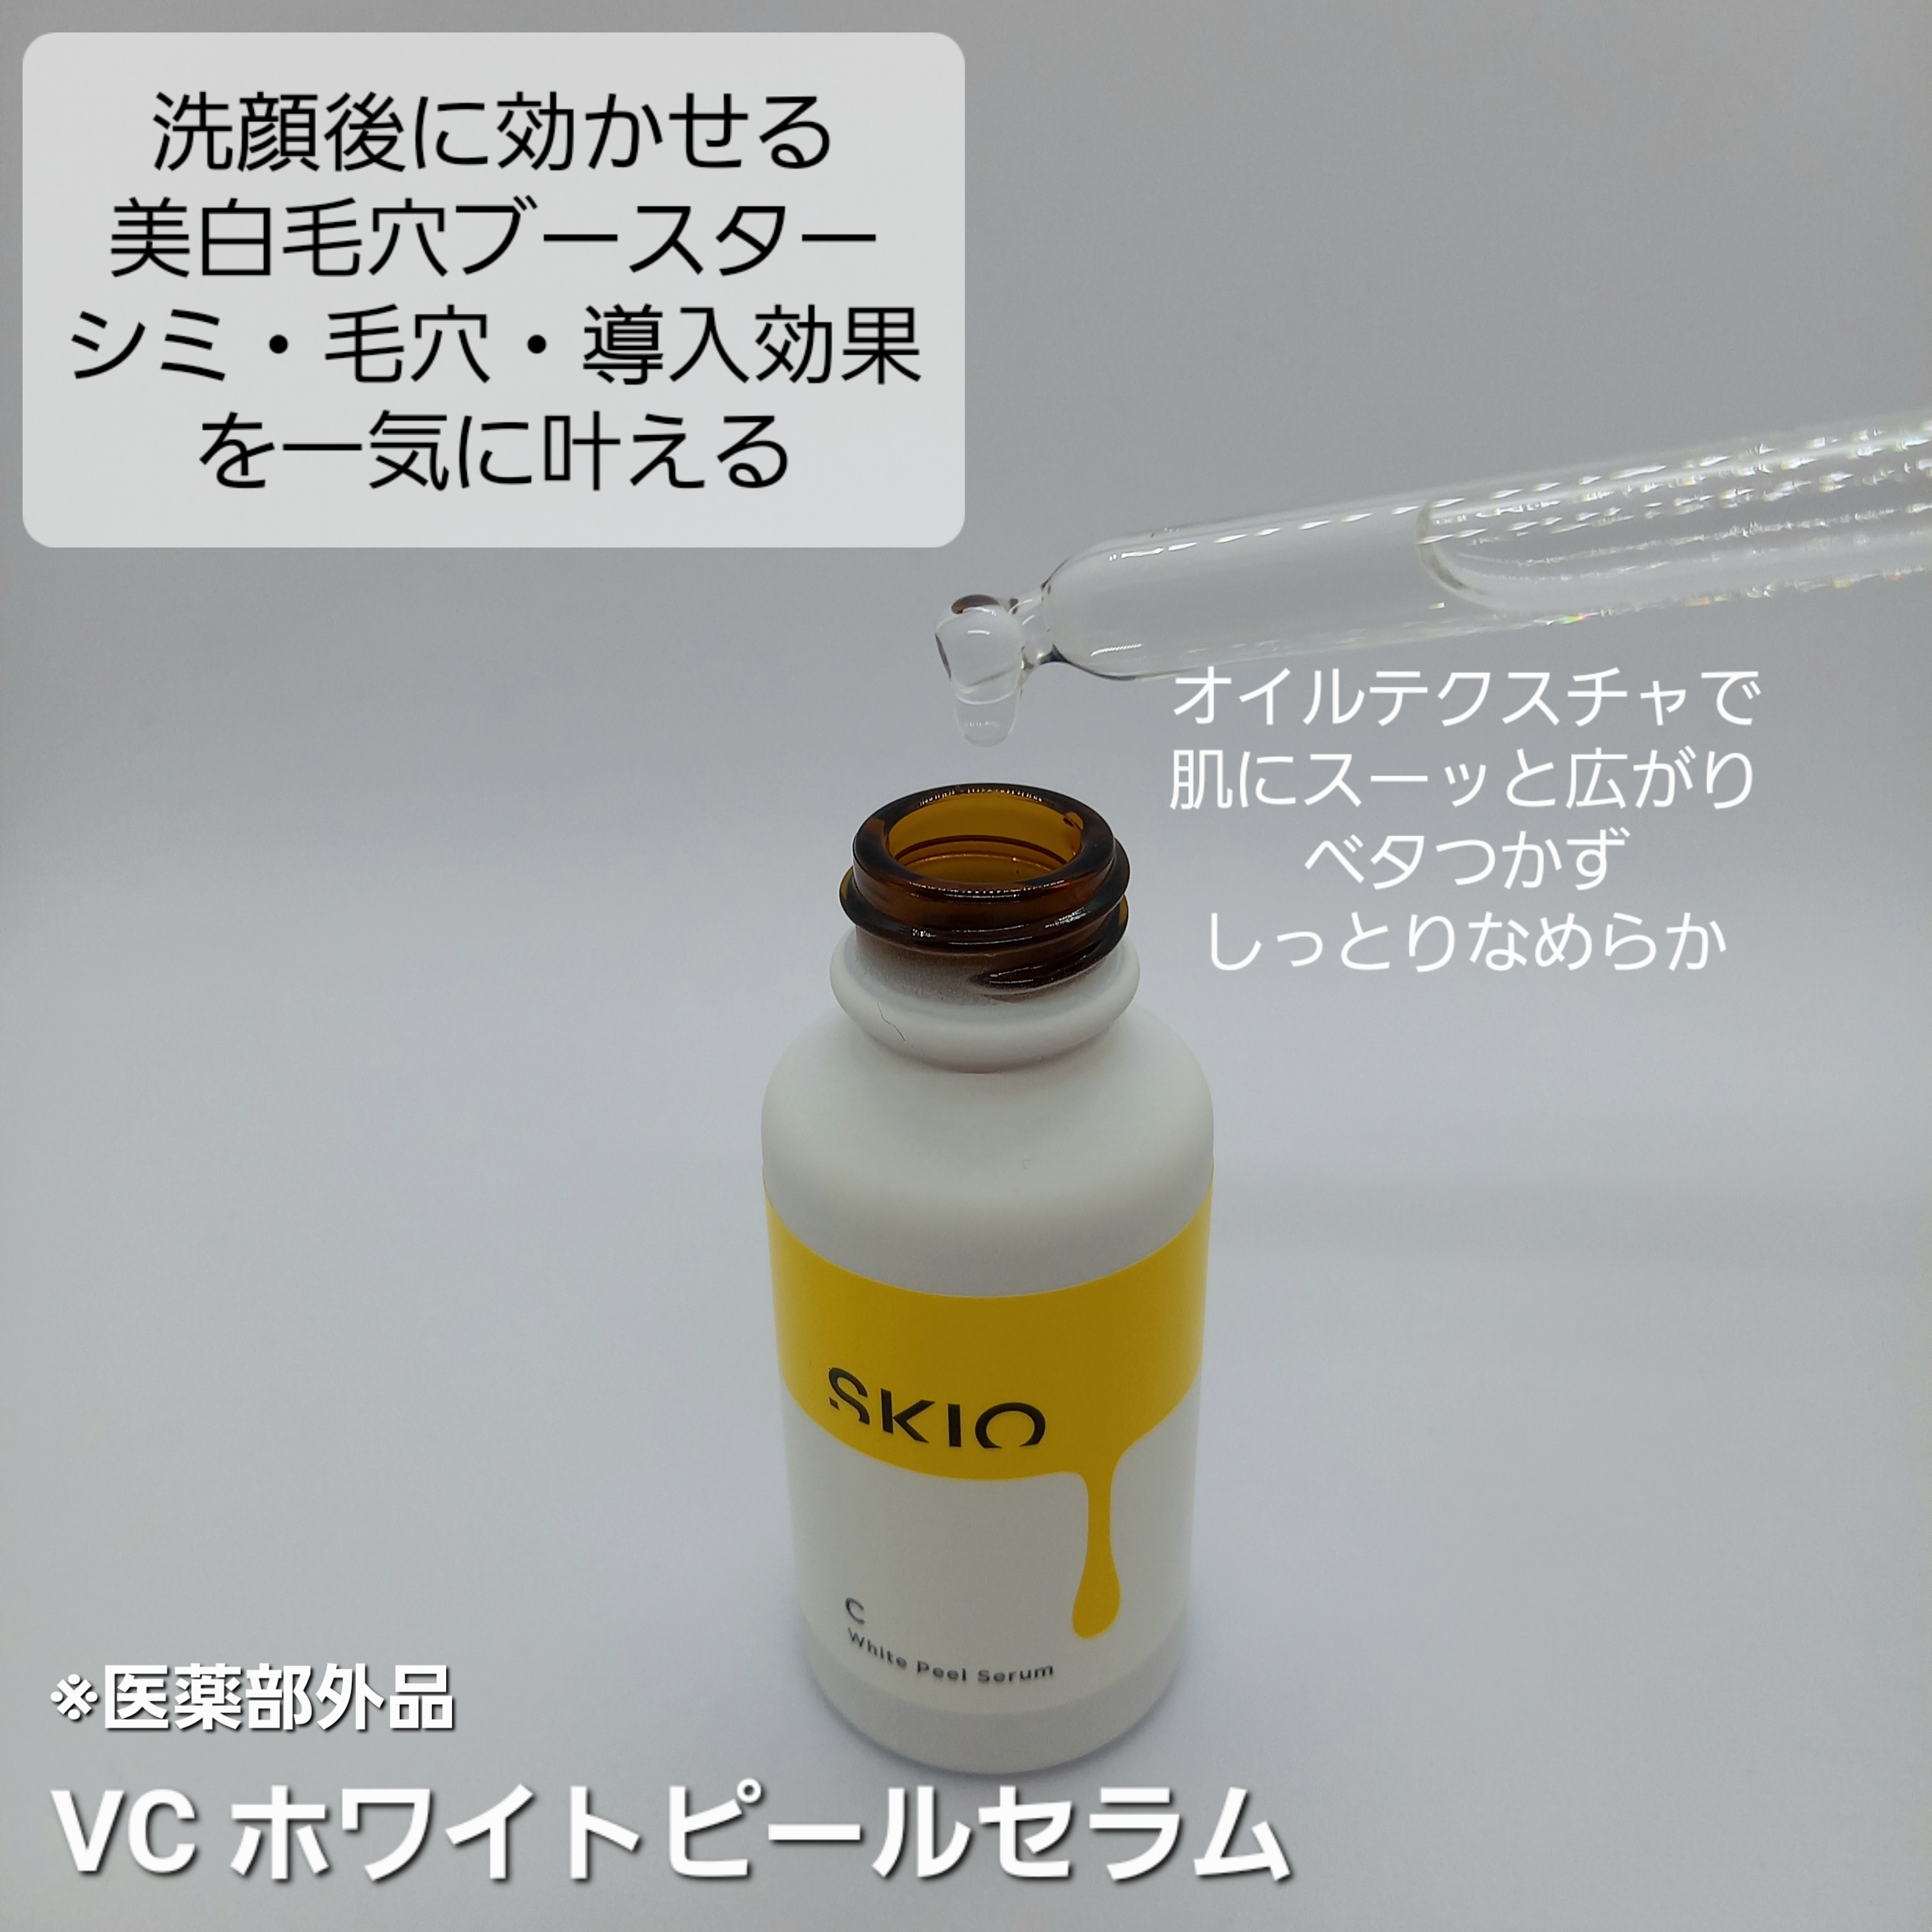 SKIO スキオVCホワイトピールセラム - ブースター・導入液